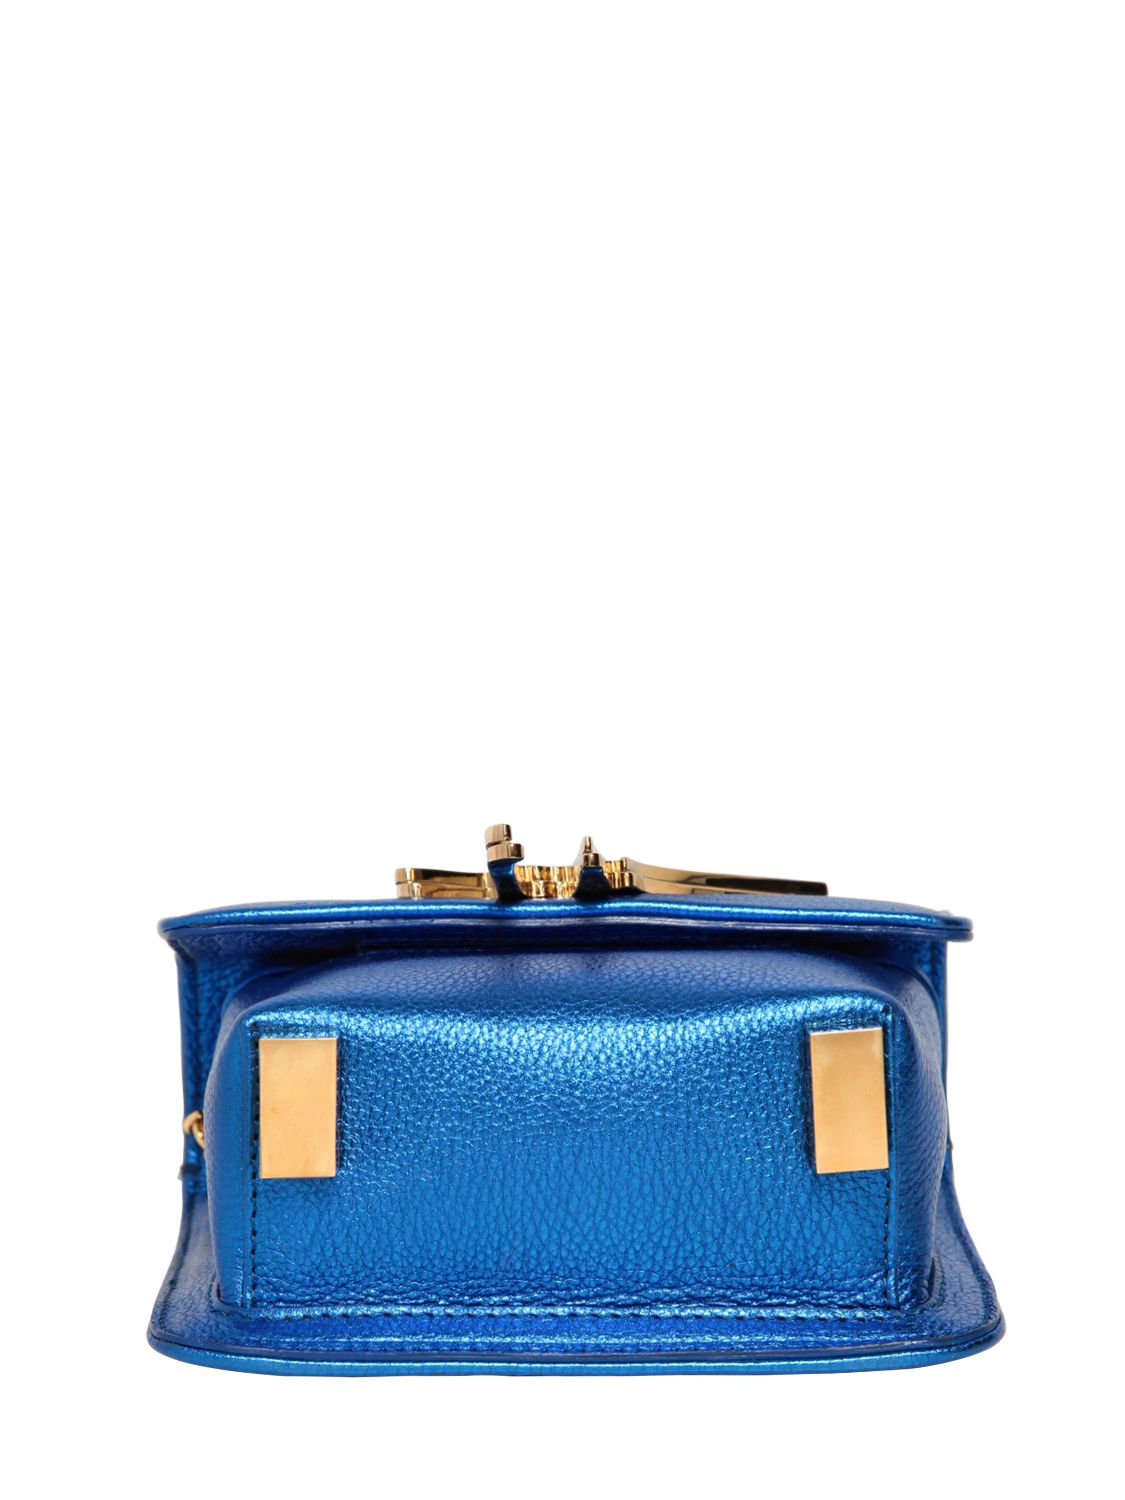 Lyst - Giuseppe Zanotti Grained Metallic Leather Shoulder Bag in Blue